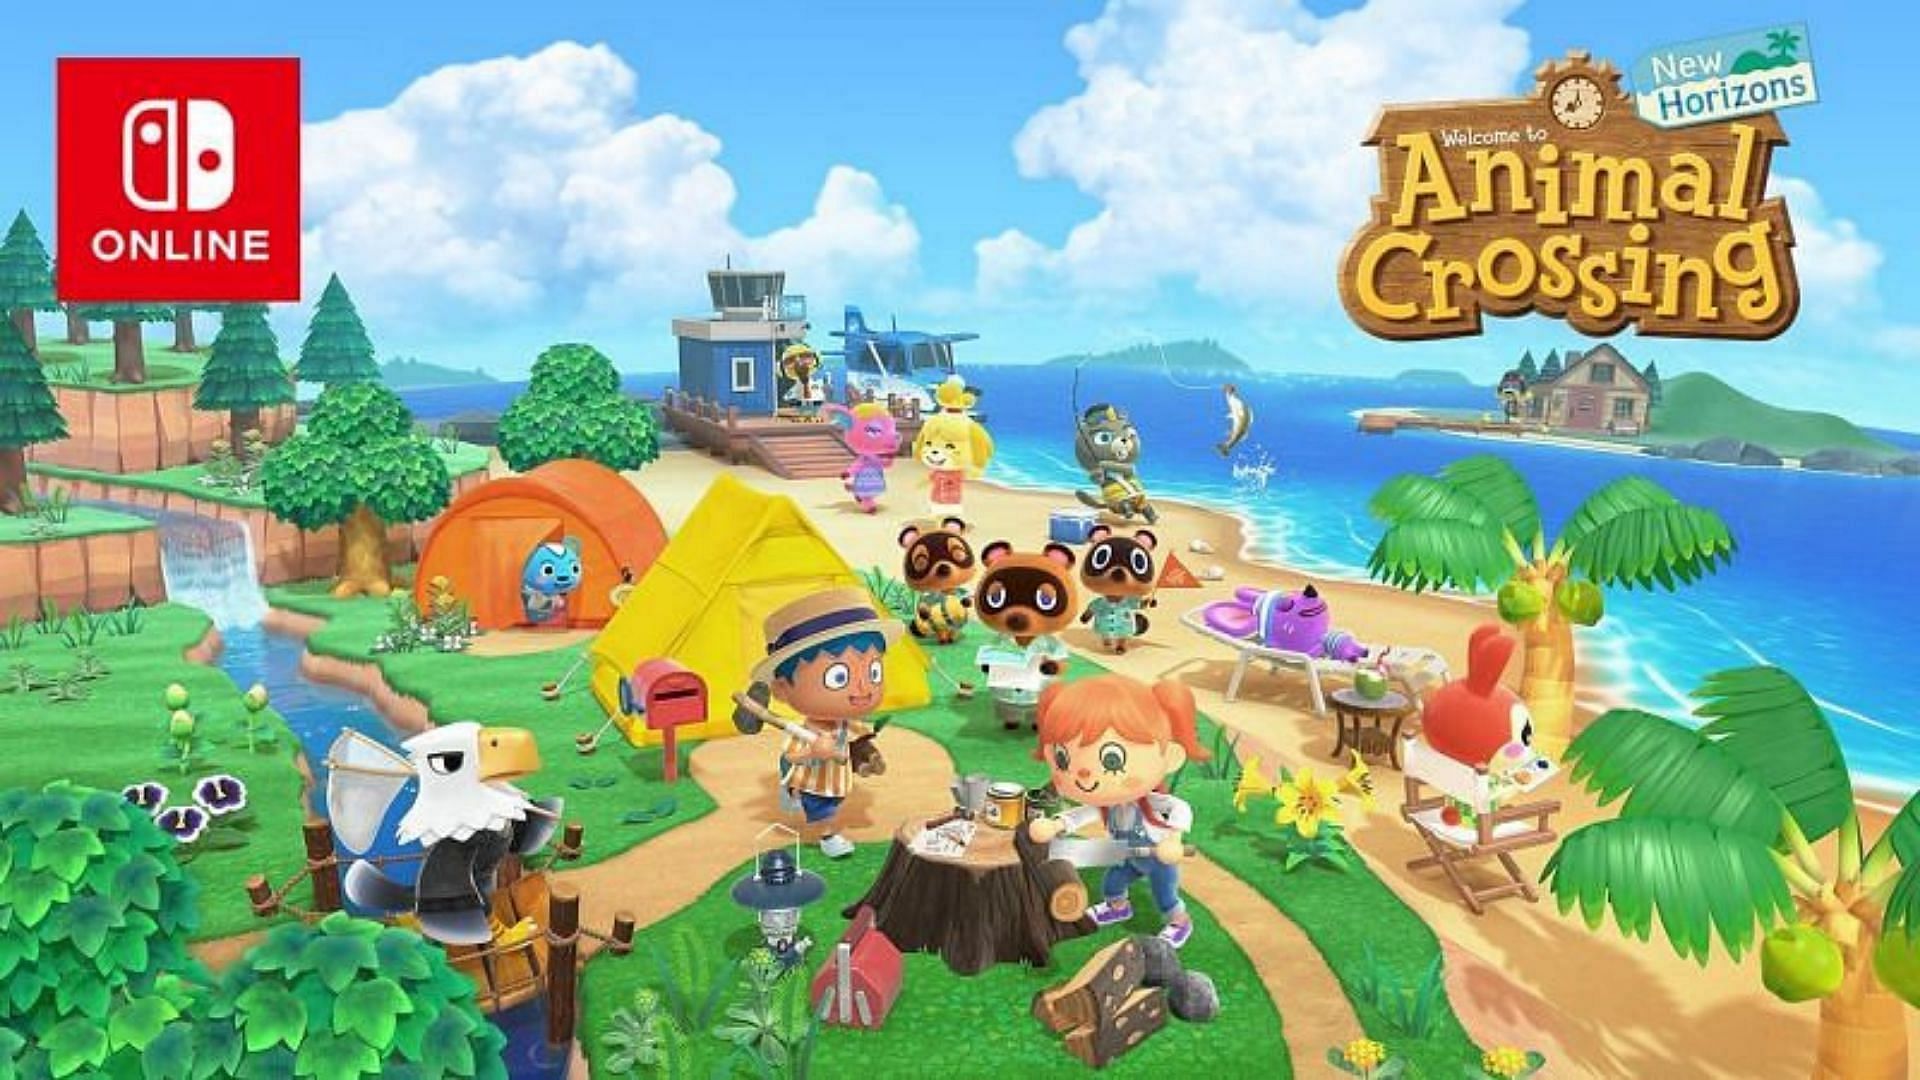 Hidden locations in Animal Crossing: New Horizons revealed (Image: Sportskeeda)